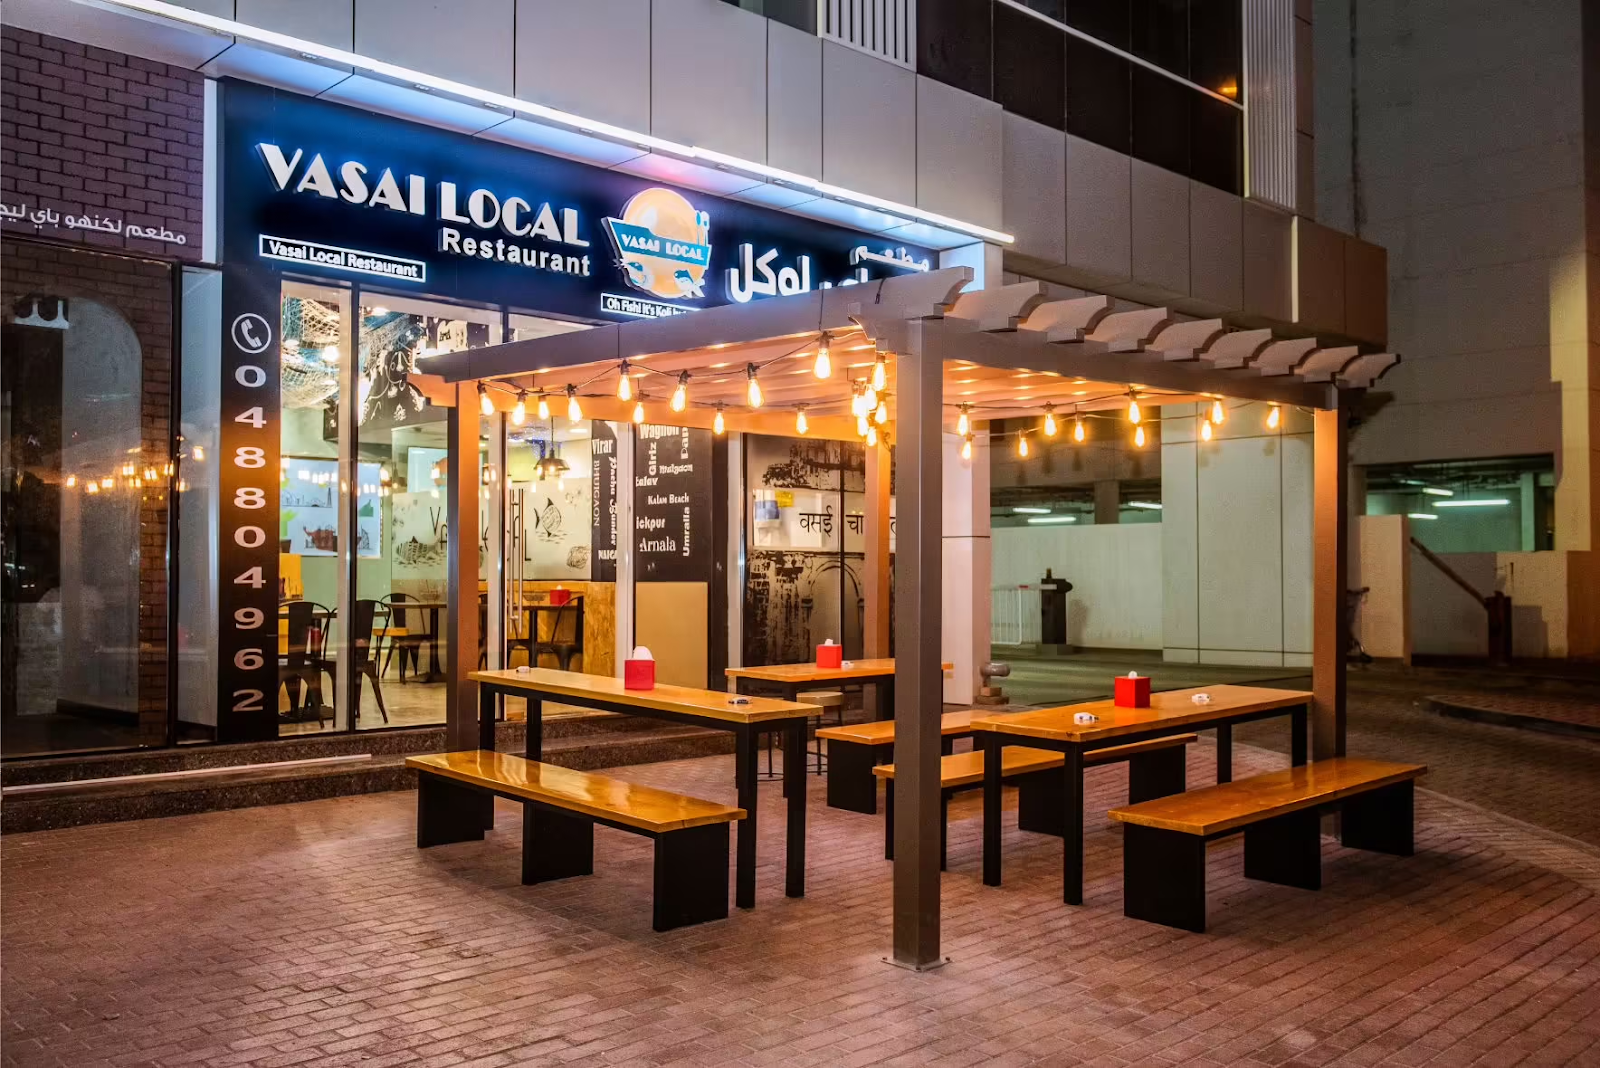 Vasai Local Restaurant Dubai